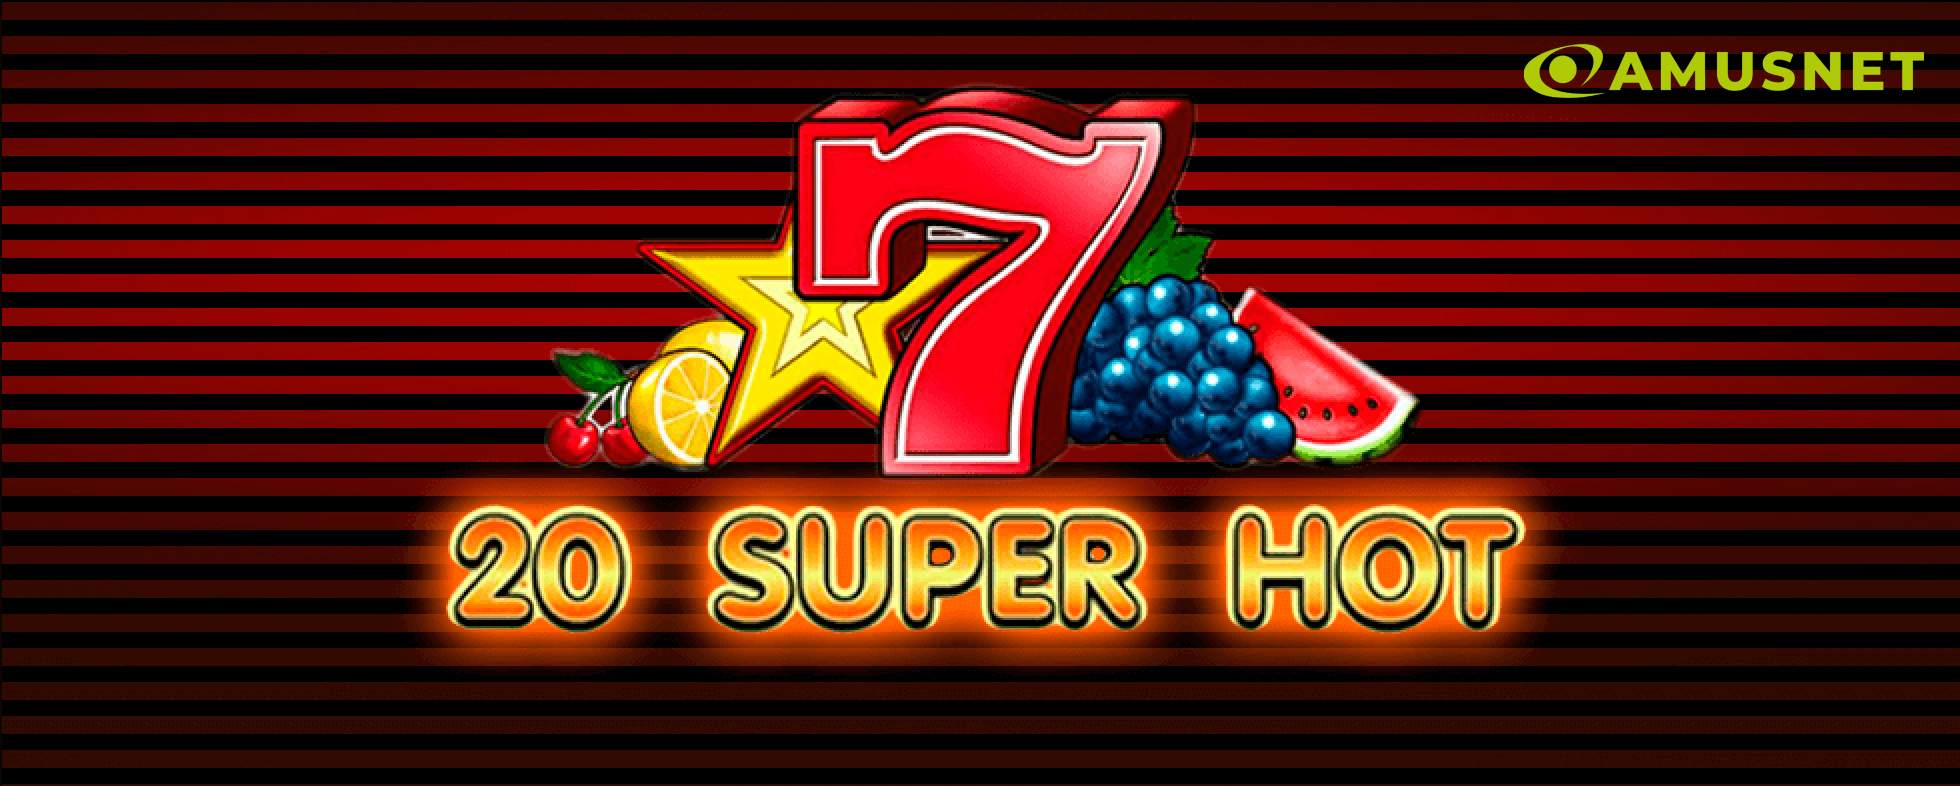 20 Super Hot by Amusnet Interactive